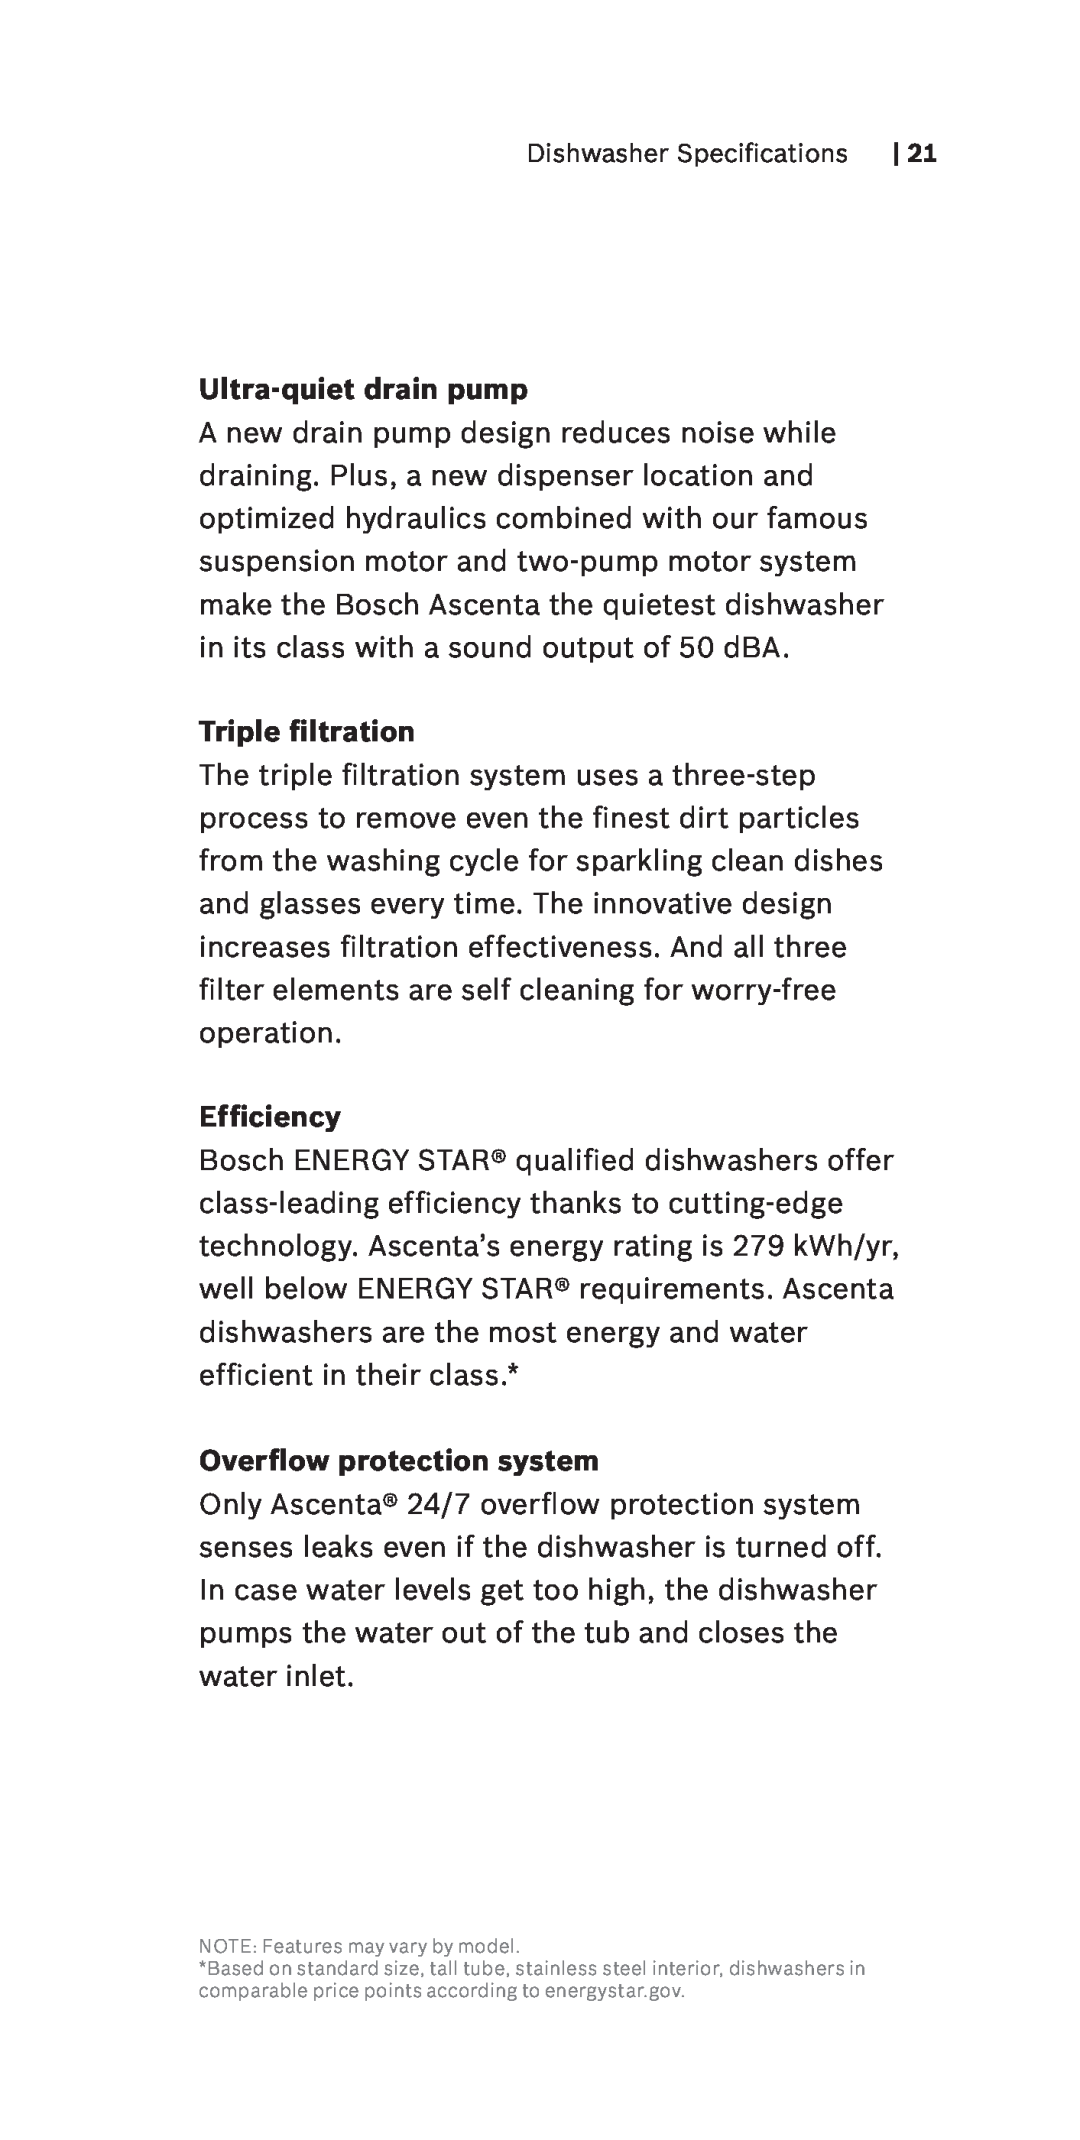 Bosch Appliances 800 Series manual Ultra-quiet drain pump, Triple filtration, Efficiency, Overflow protection system 